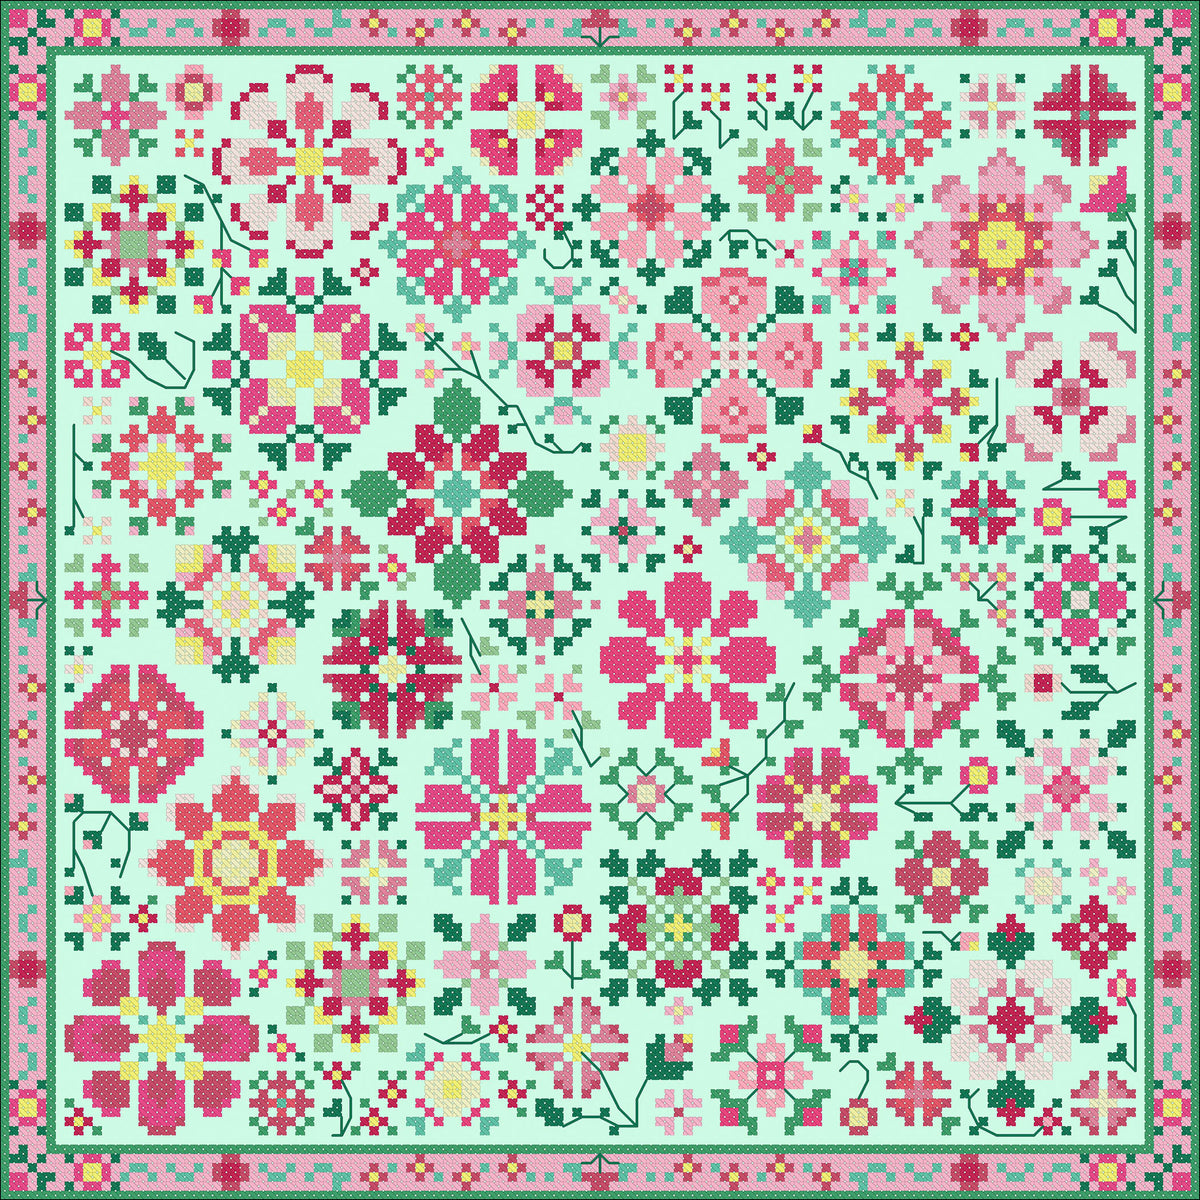 Flower-a-Day Cross Stitch Pattern - Pink